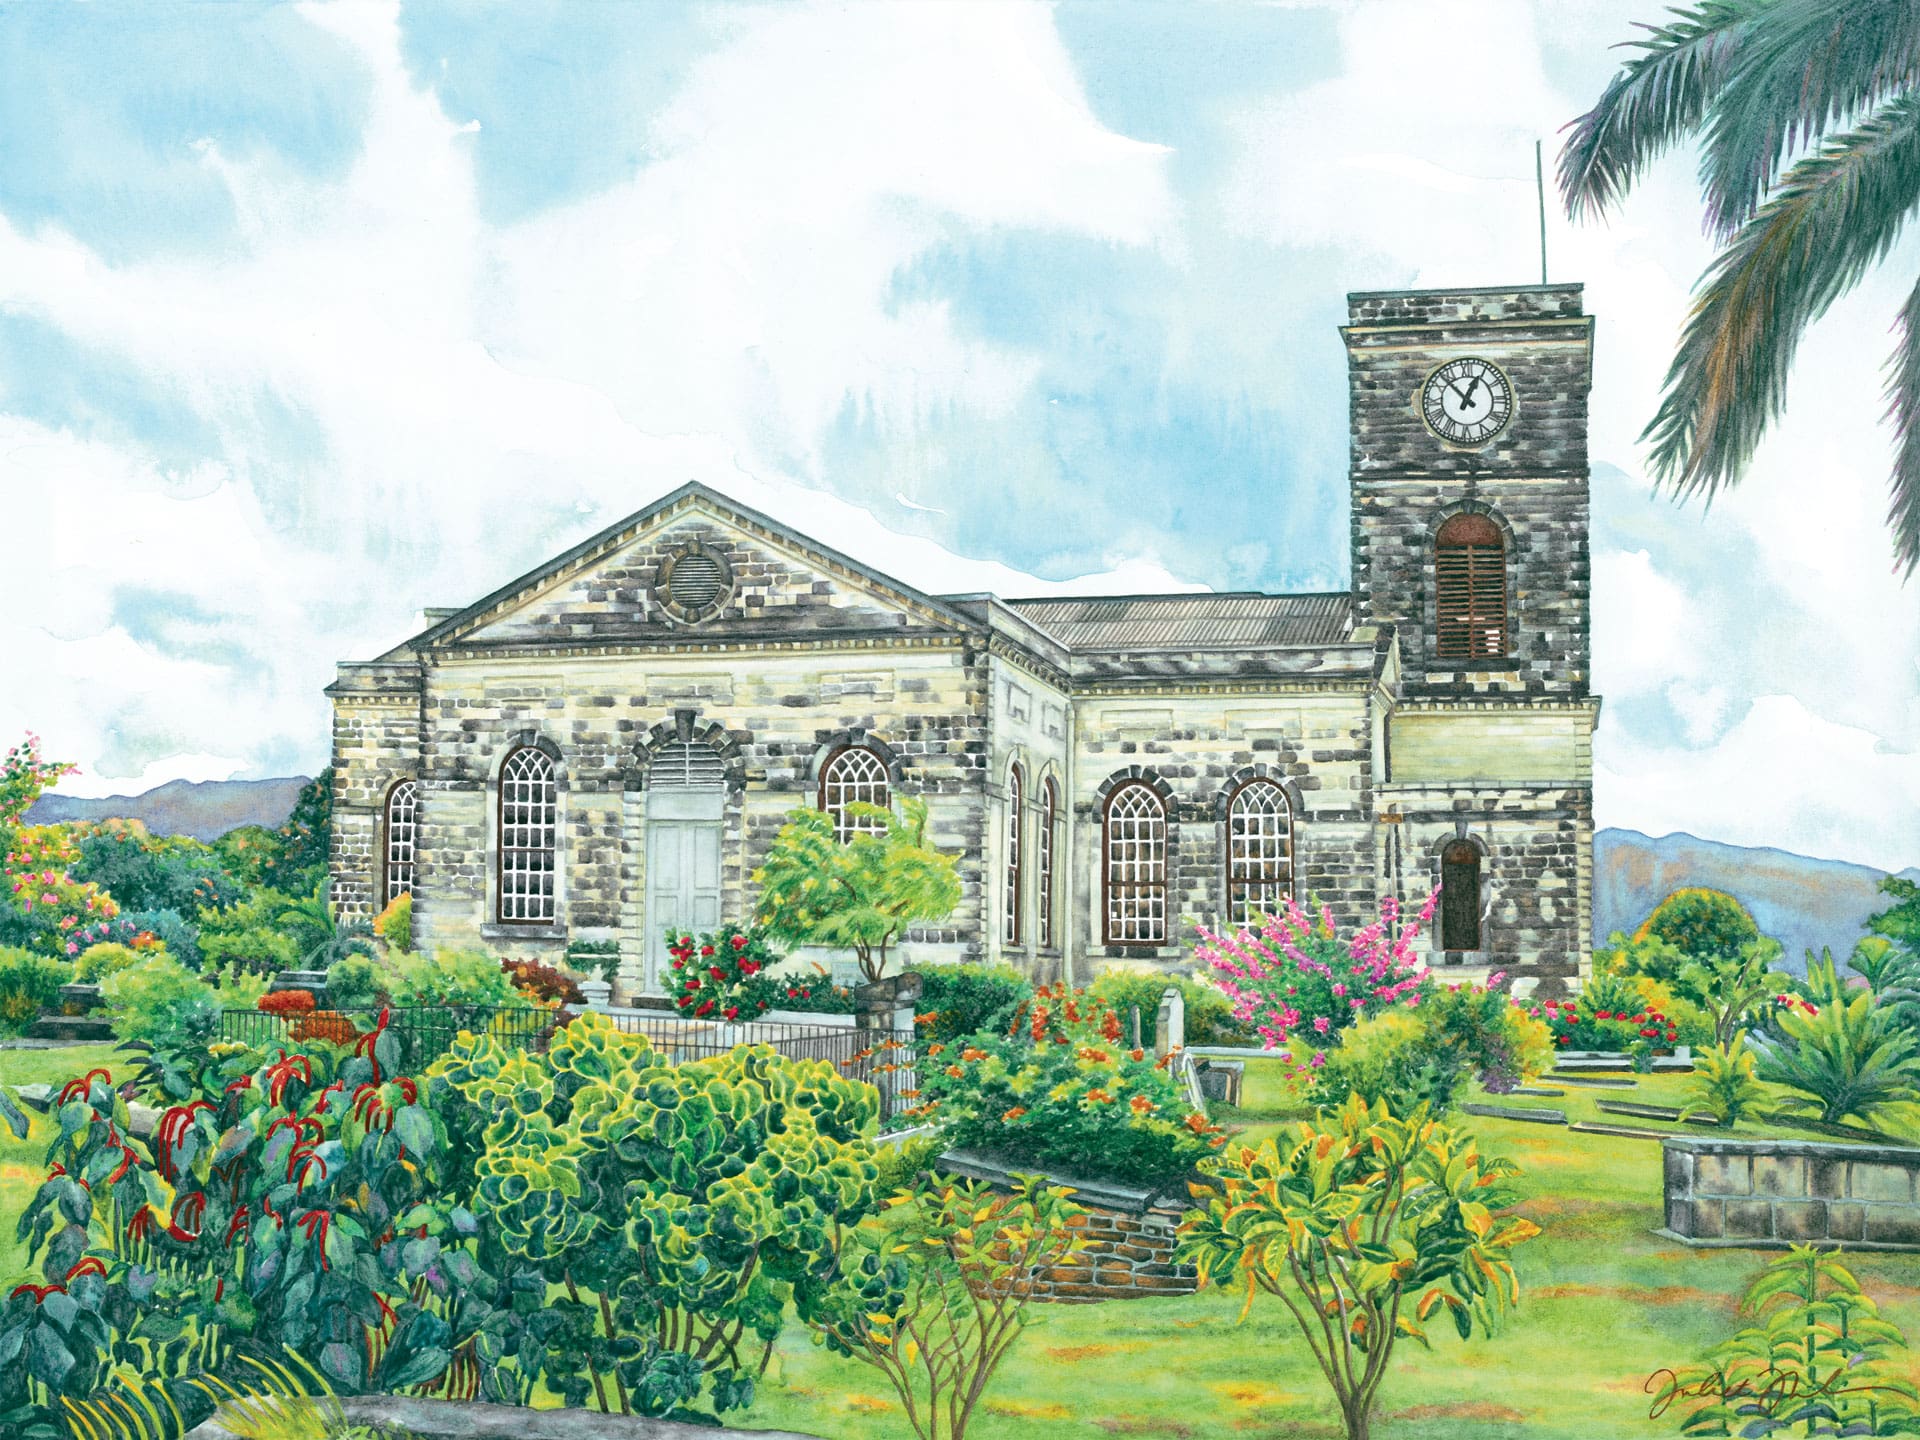 St. James Parish Church, Montego Bay: Watercolor on paper (framed)